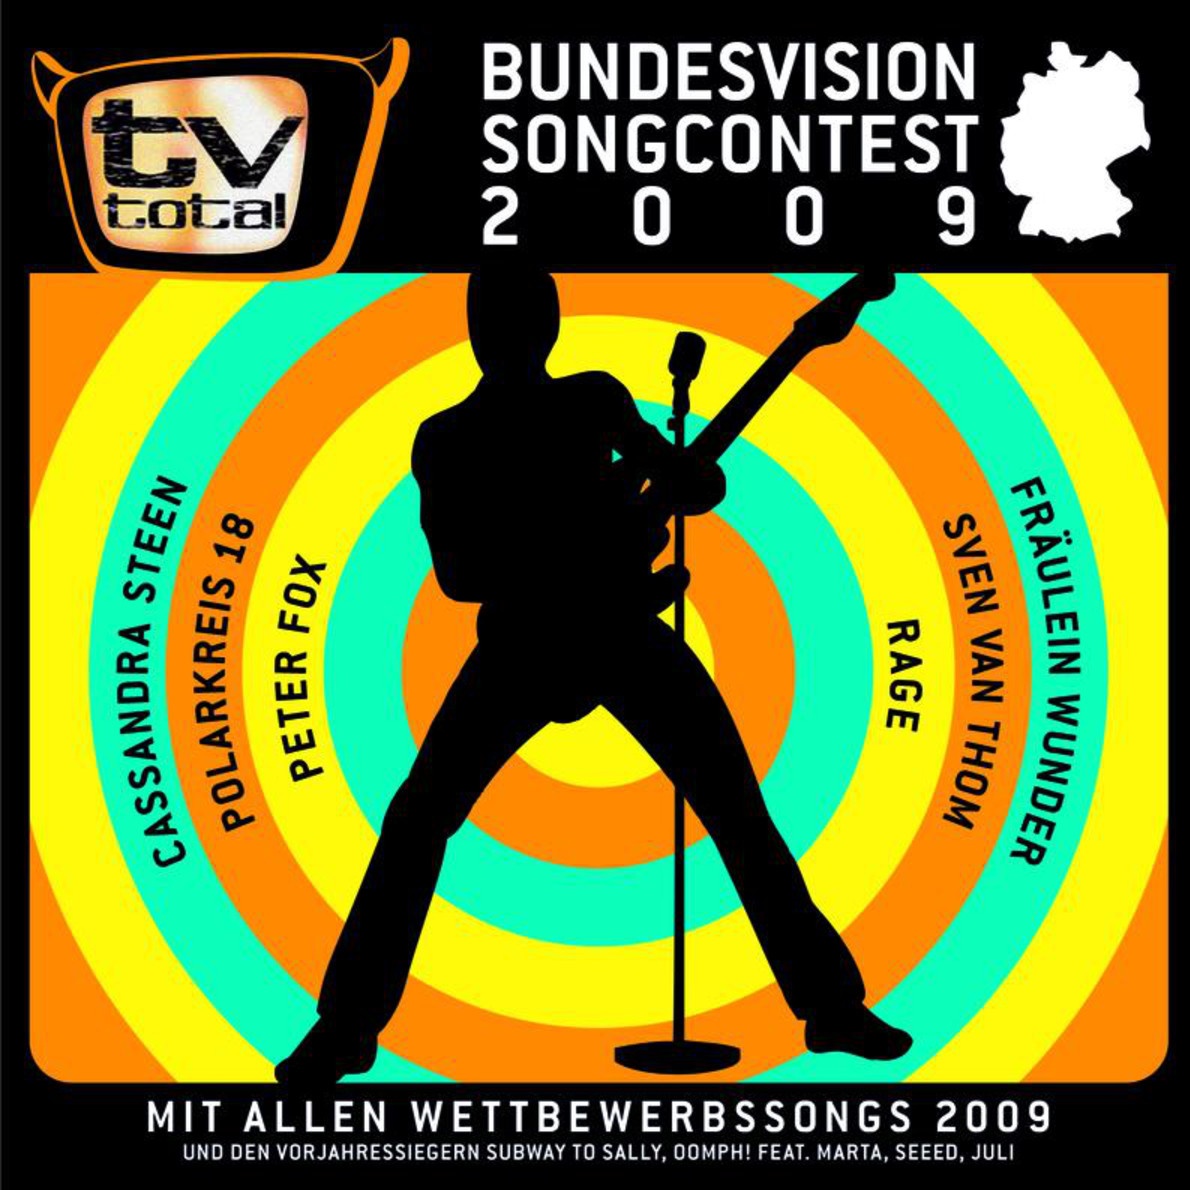 Bundesvision Songcontest 2009